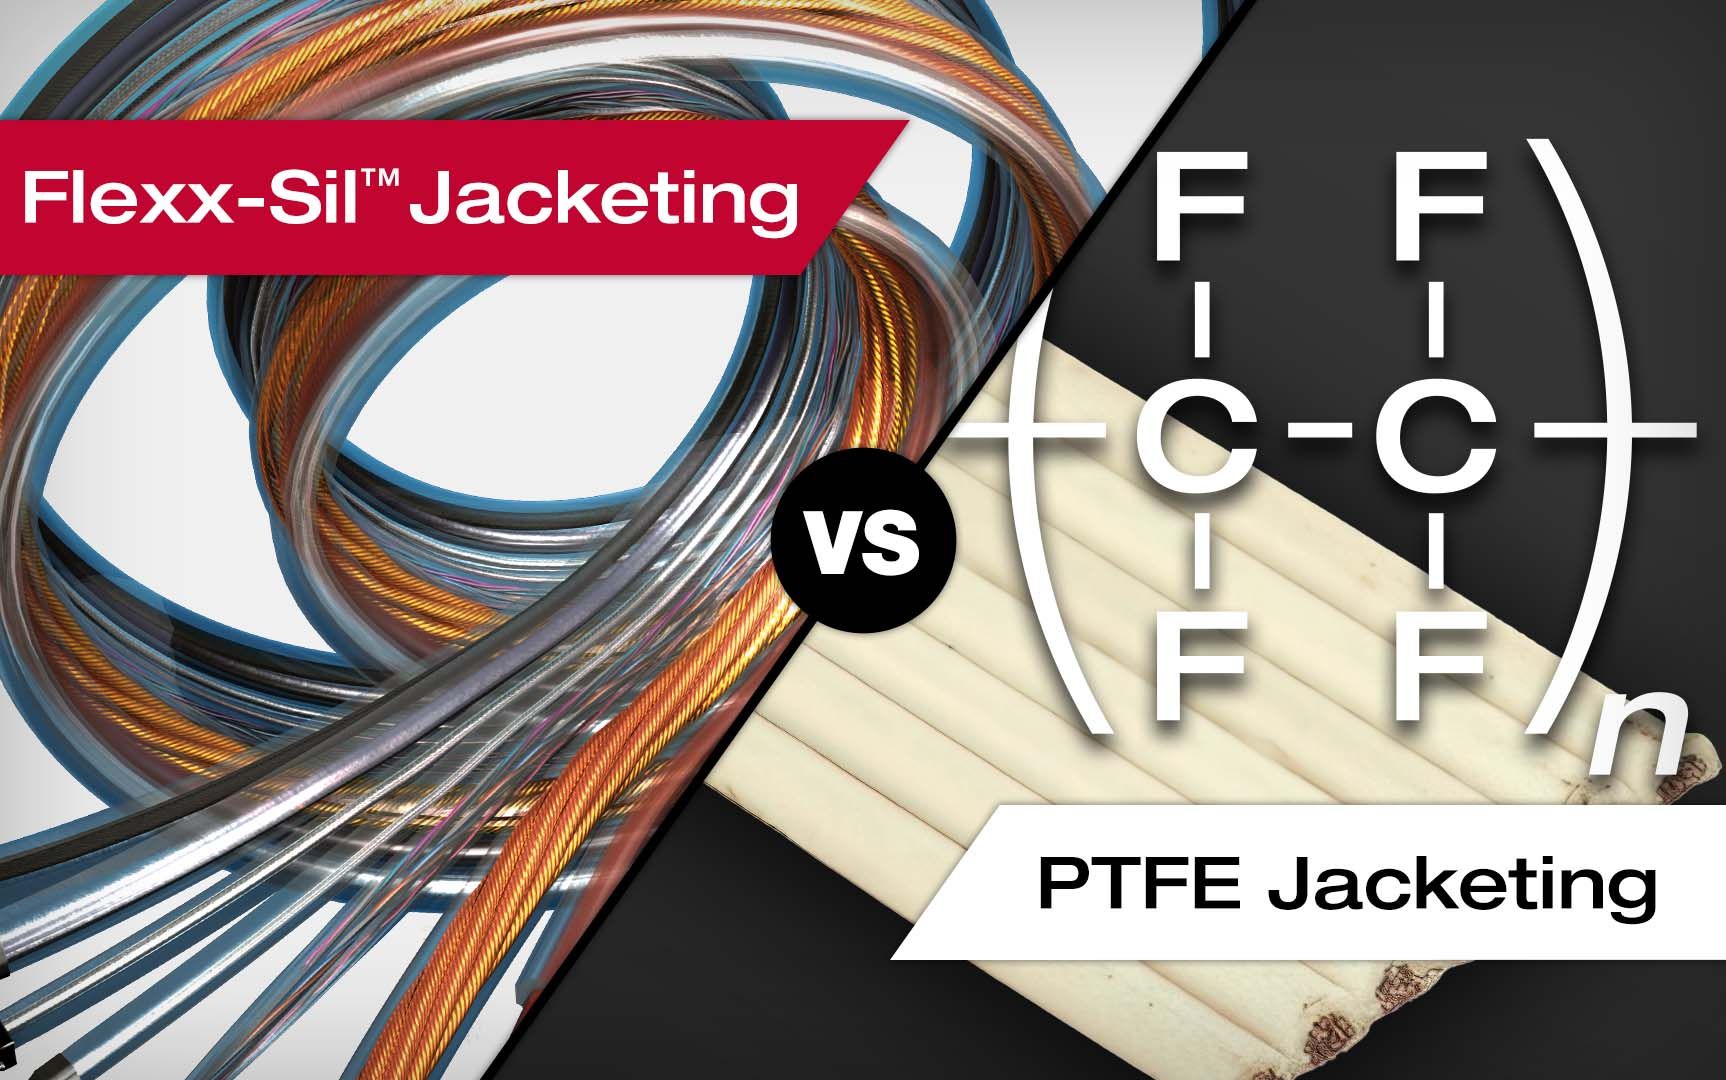 Flexx-Sil™ Jacketing vs PTFE Jacketing